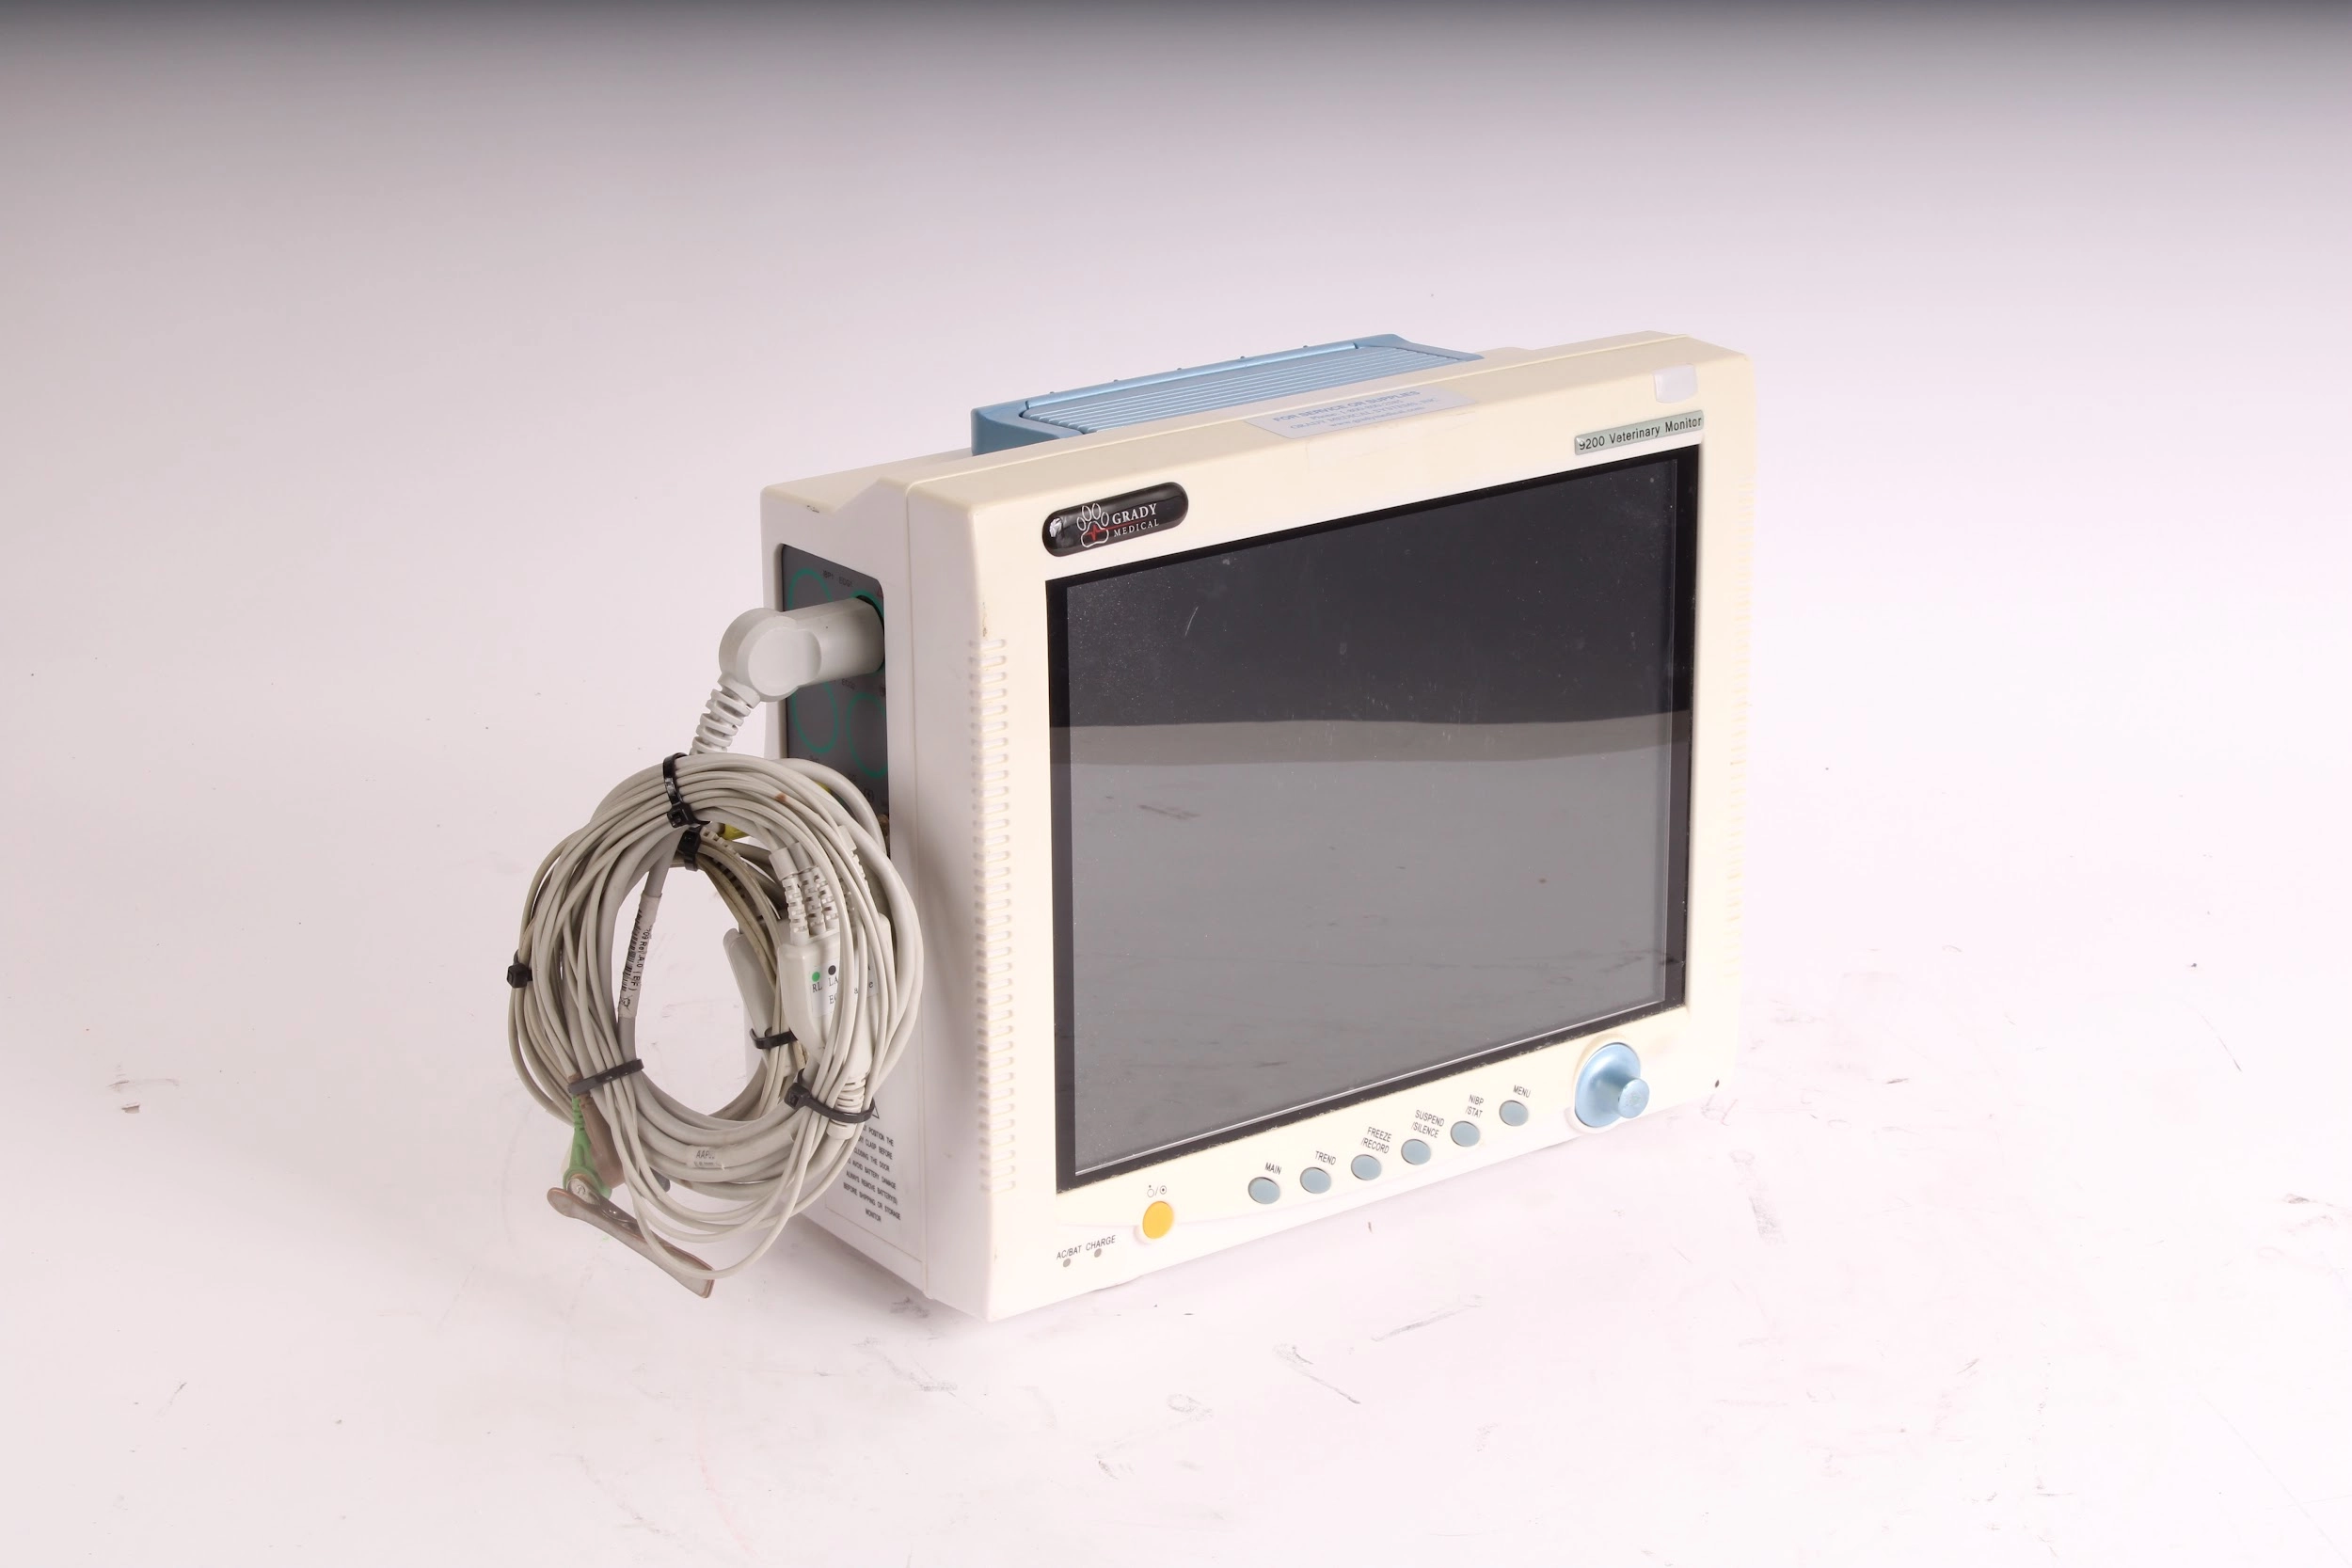 Grady Medical GradyVet 9200 Veterinary Monitor With SP02 Sensor and ECG Cable